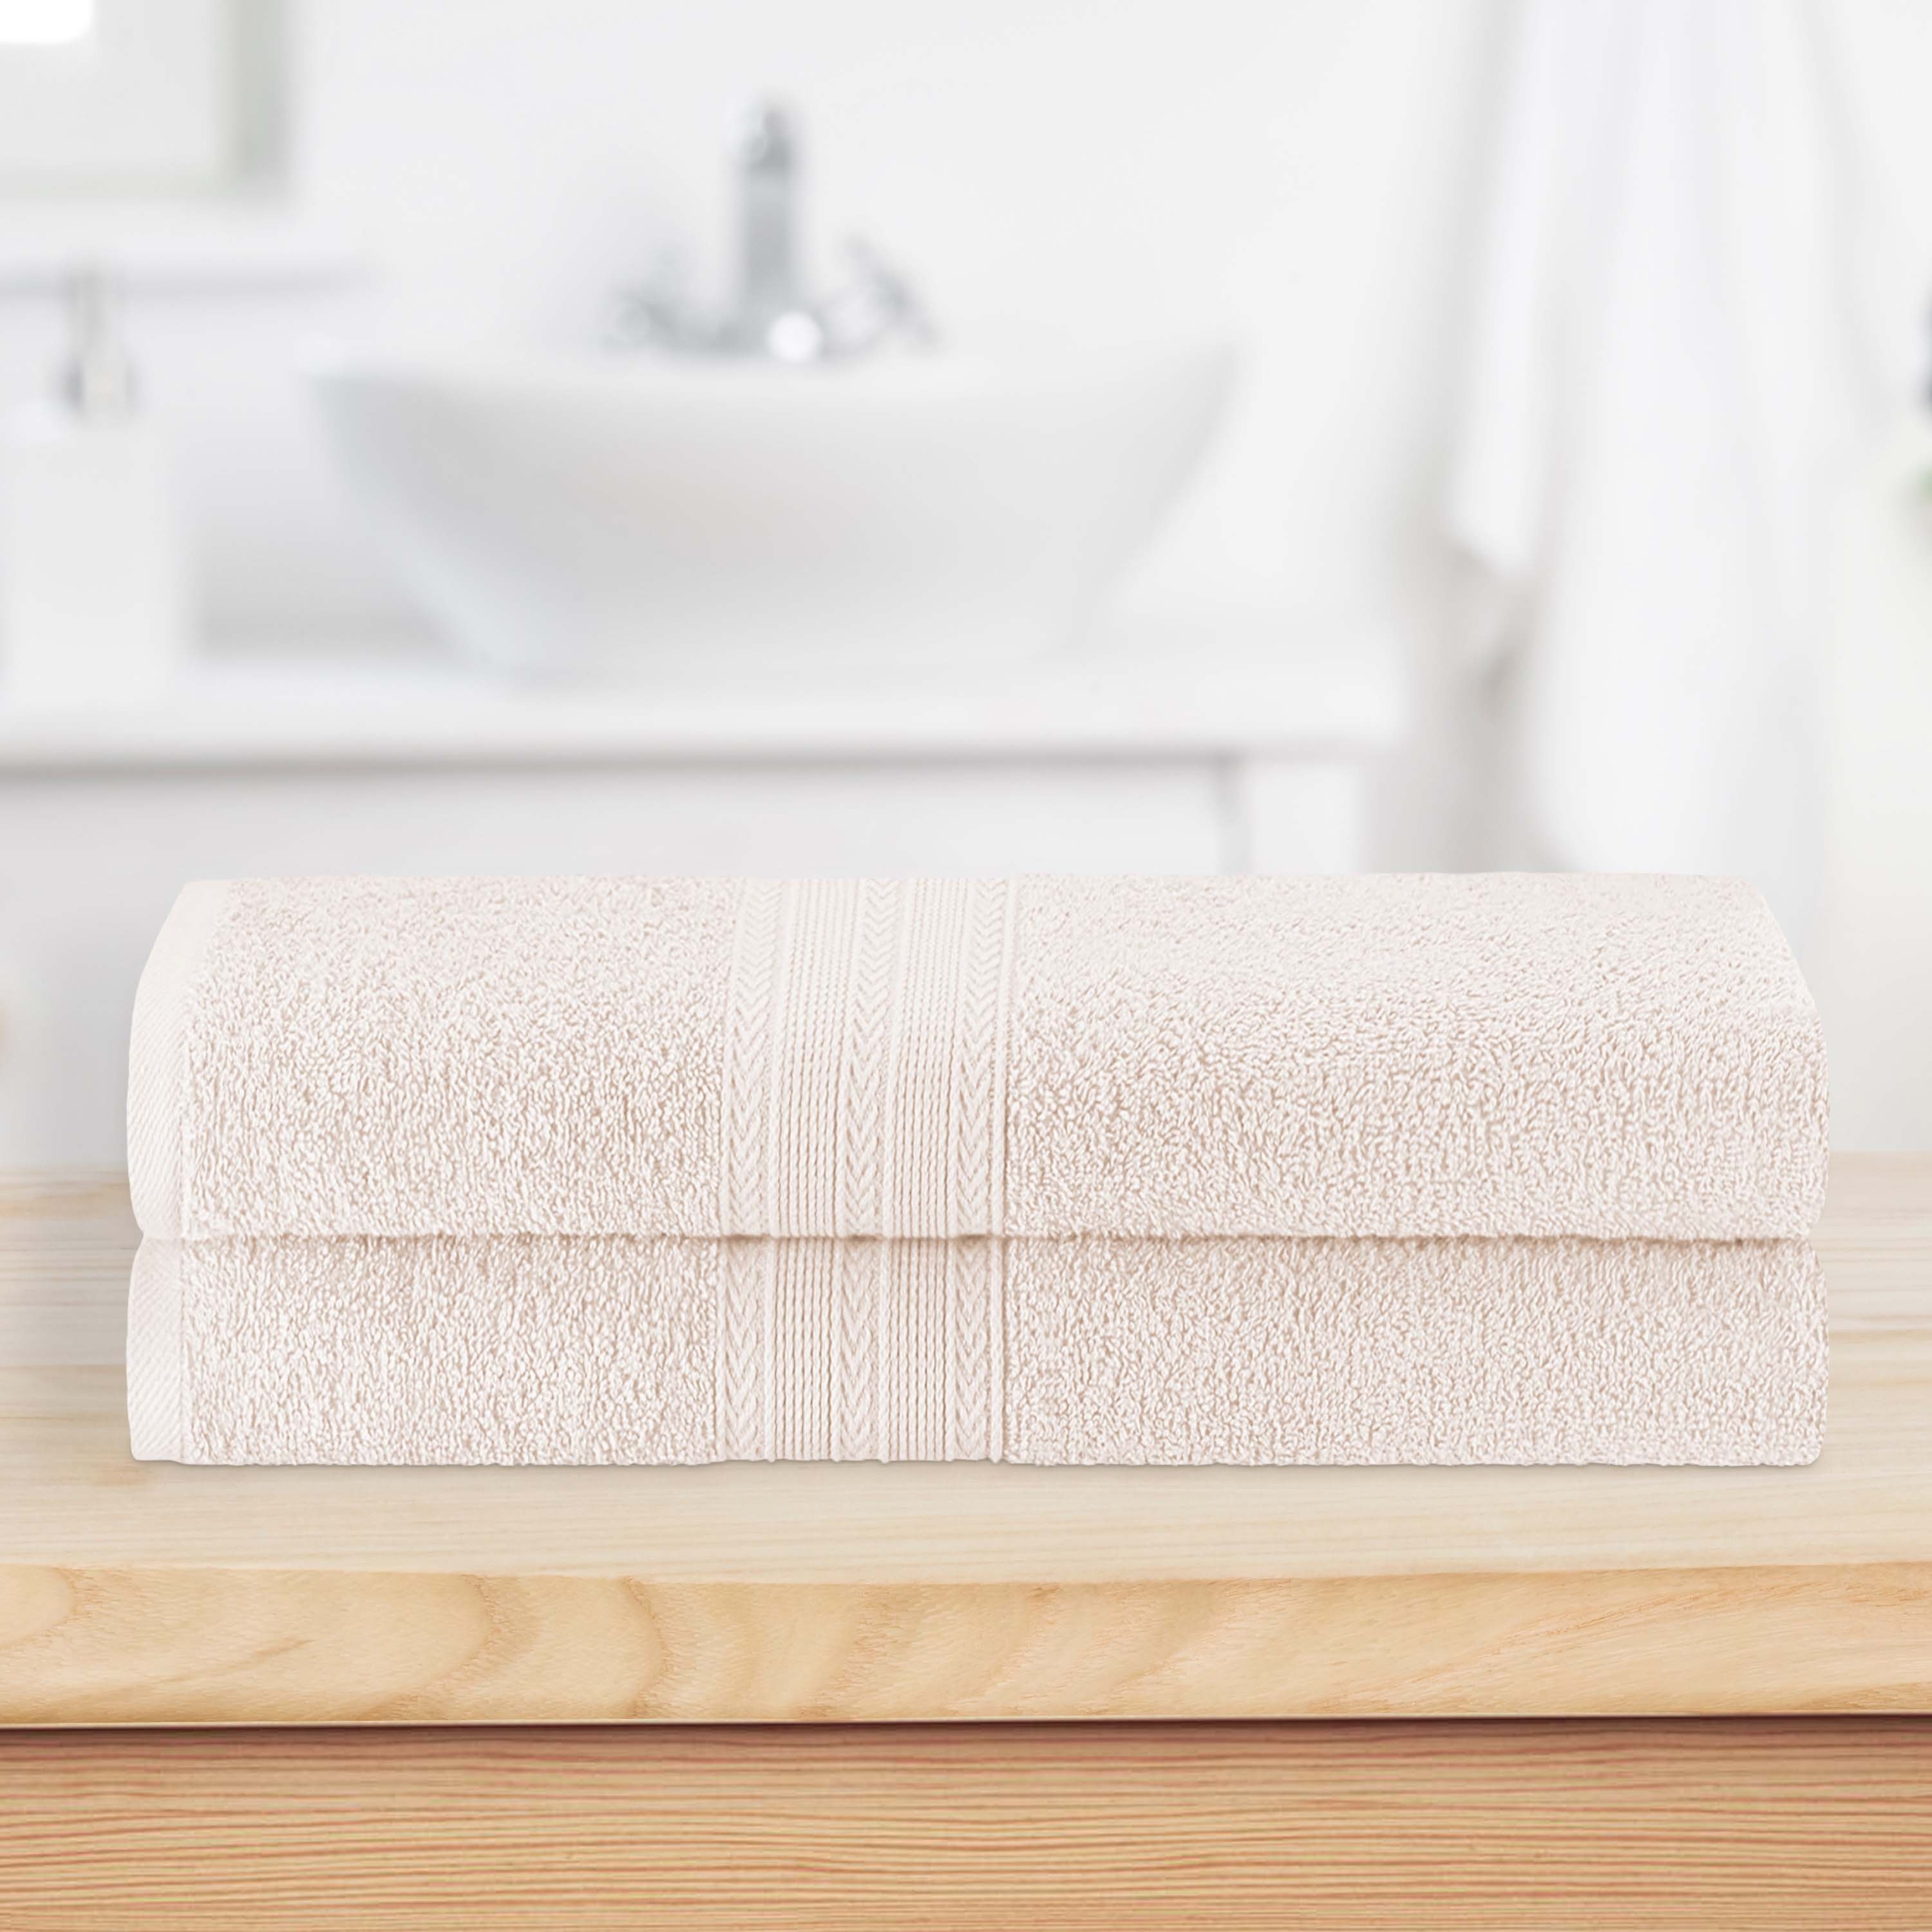 Charisma 100% Hygro Cotton Bath Towel , Light Brown . Features